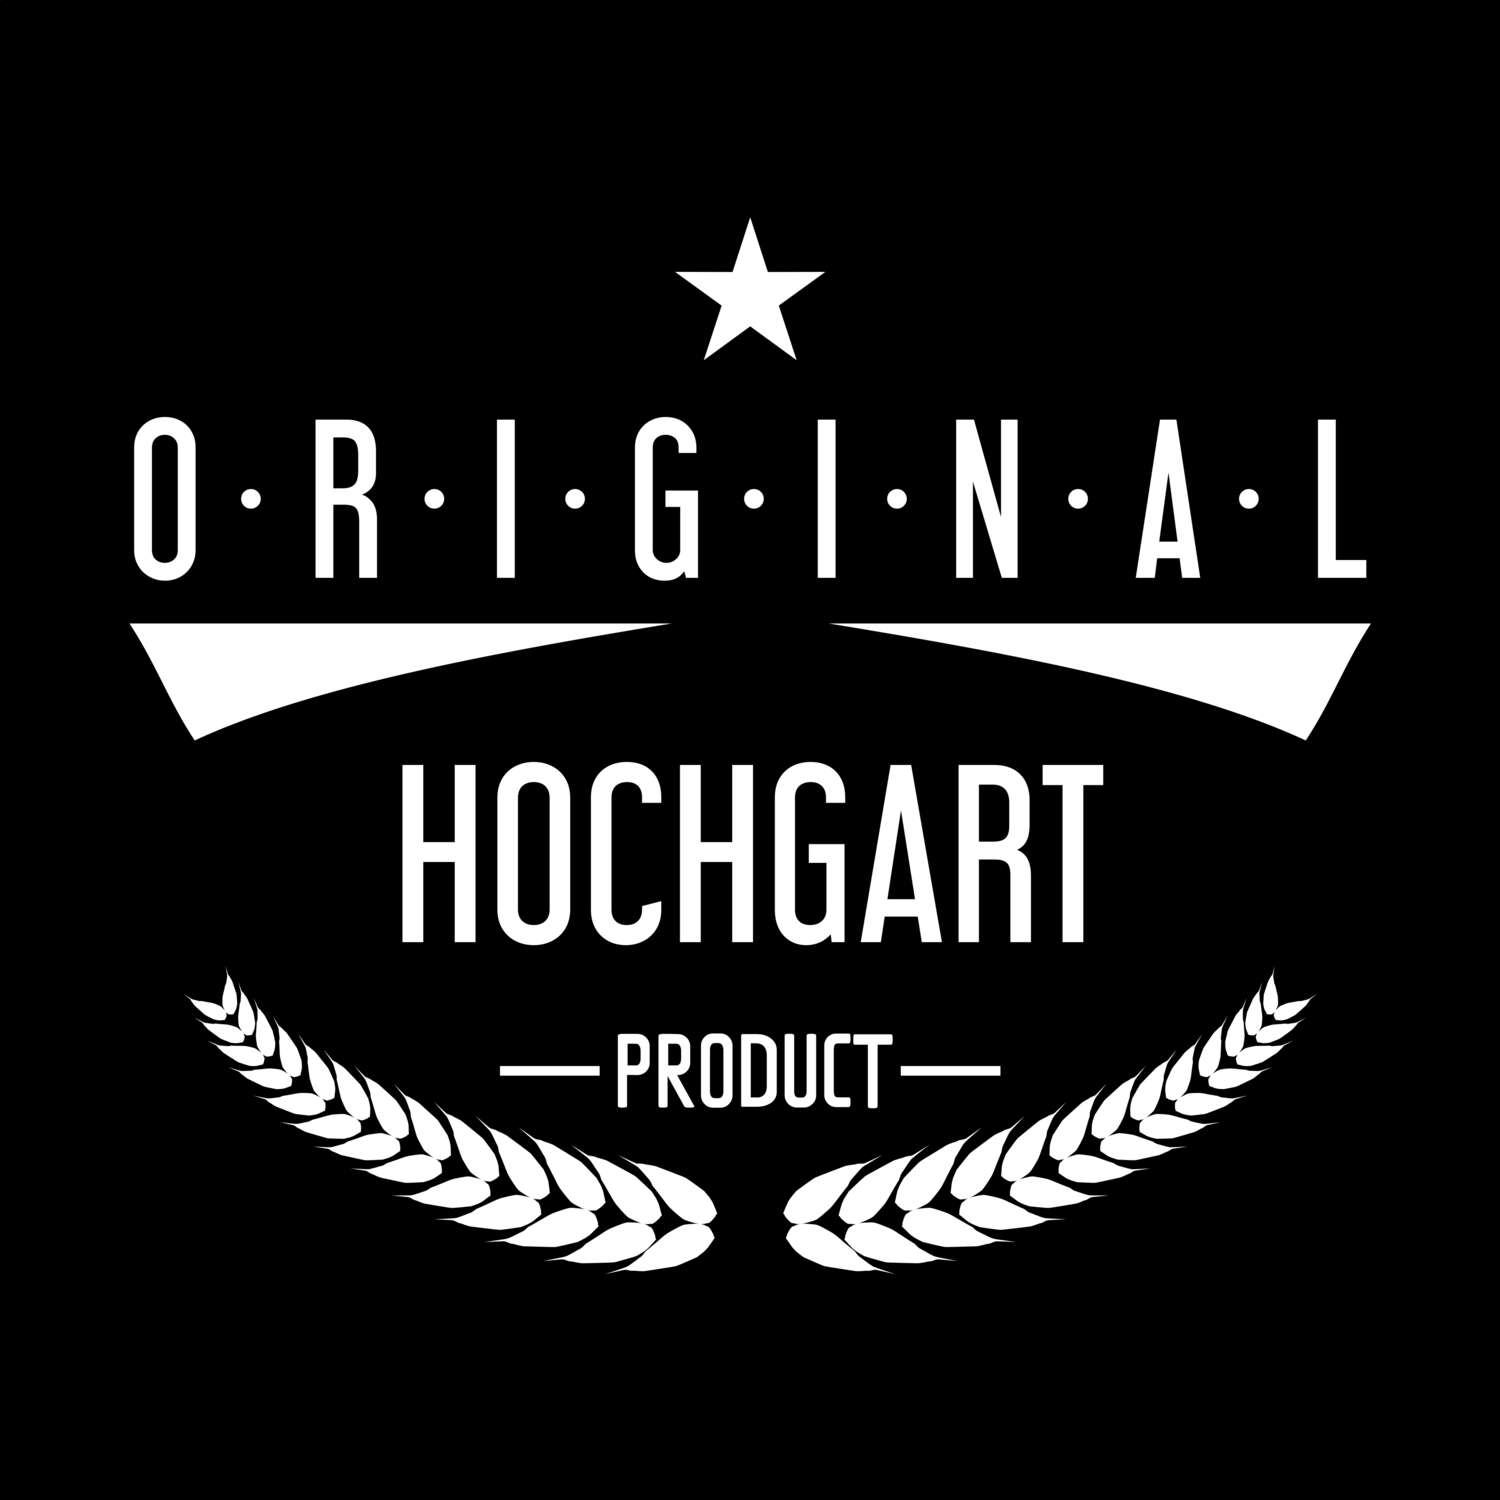 Hochgart T-Shirt »Original Product«